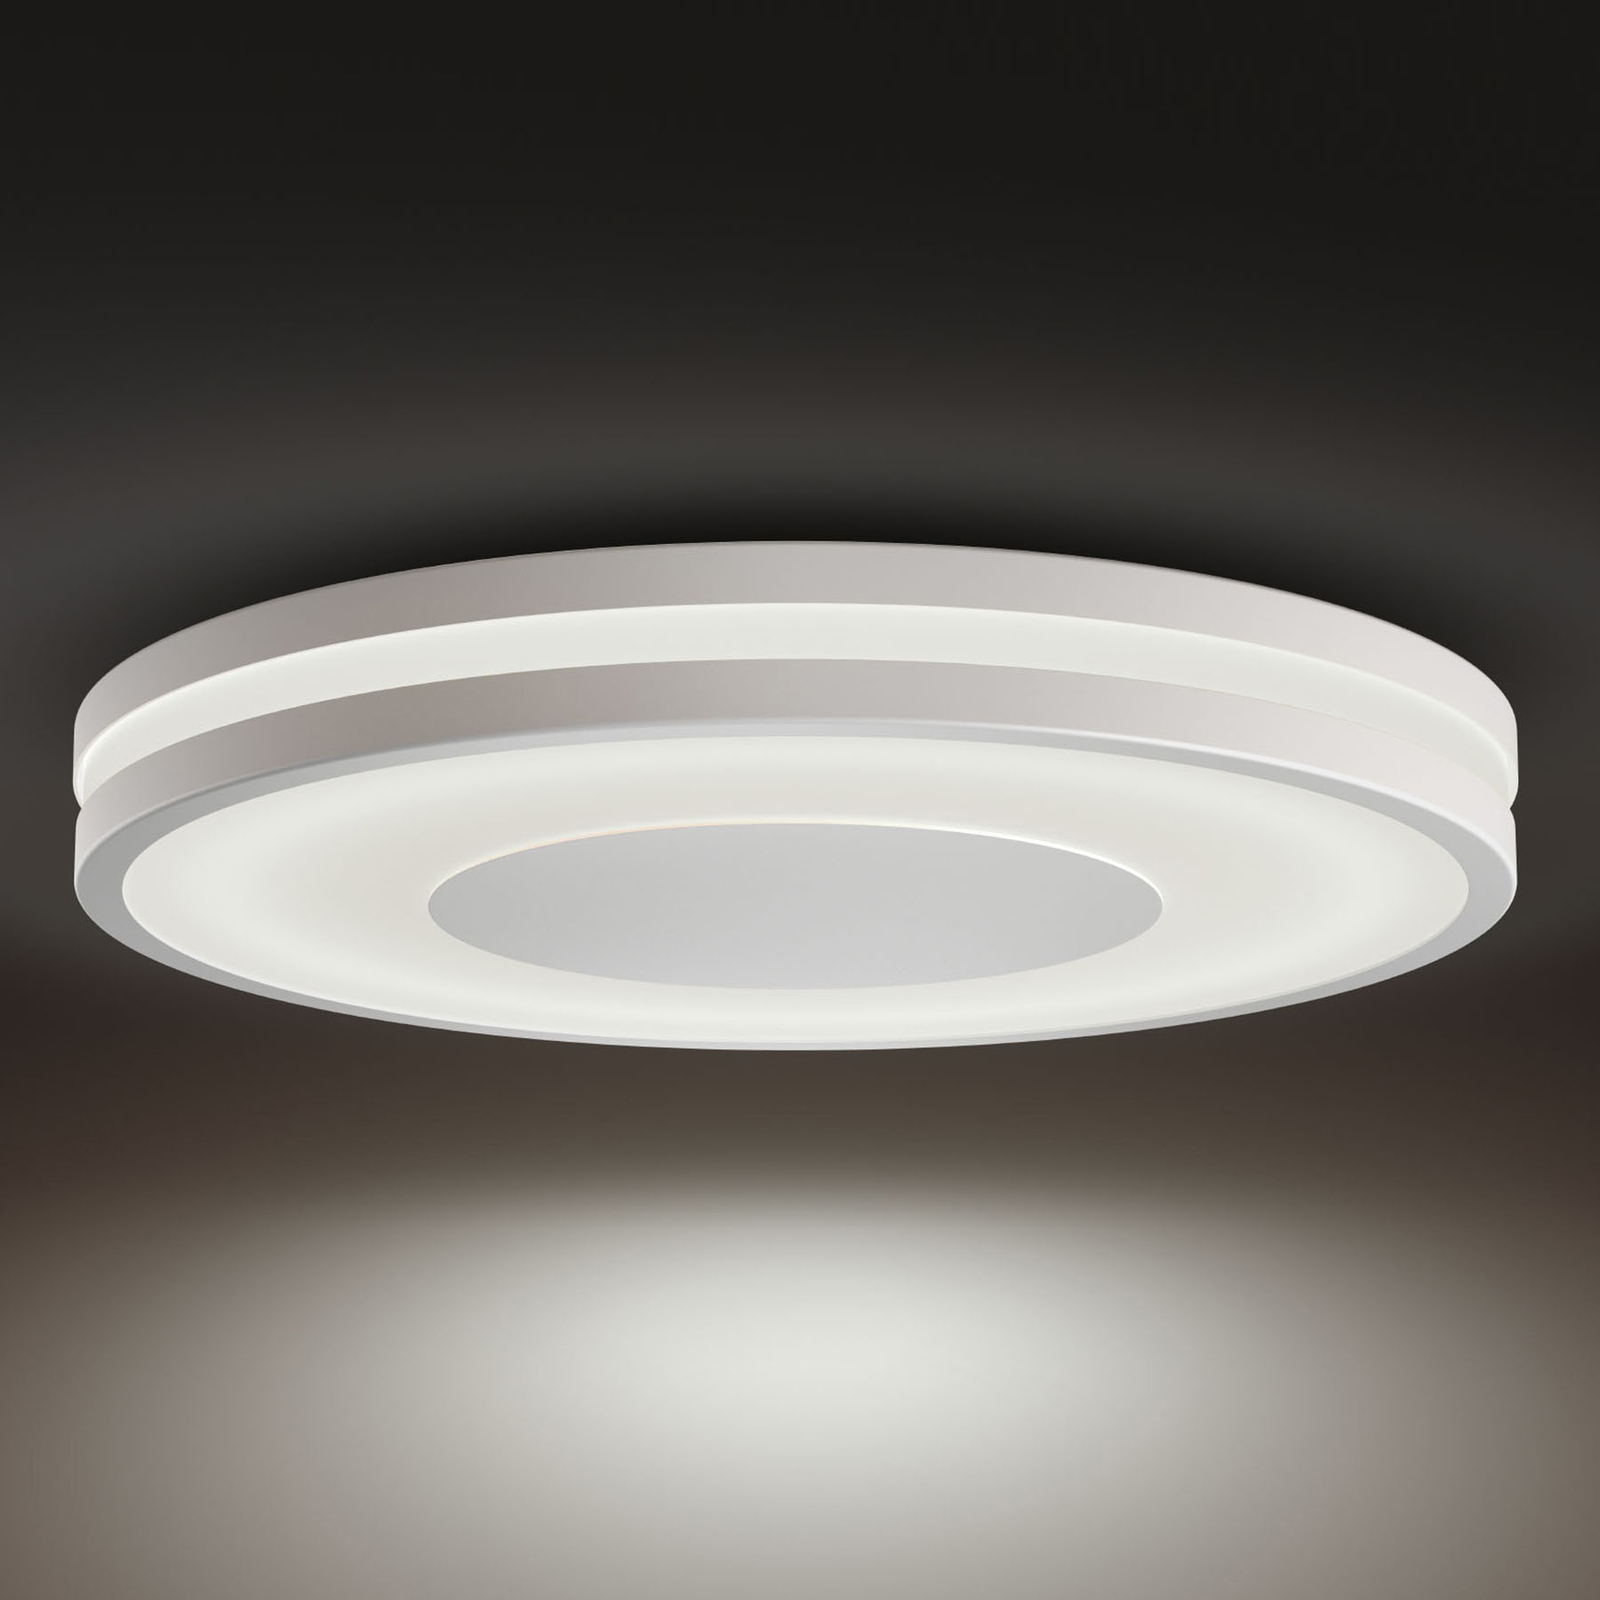 Philips Hue White Ambiance plafondlamp wit | Lampen24.nl